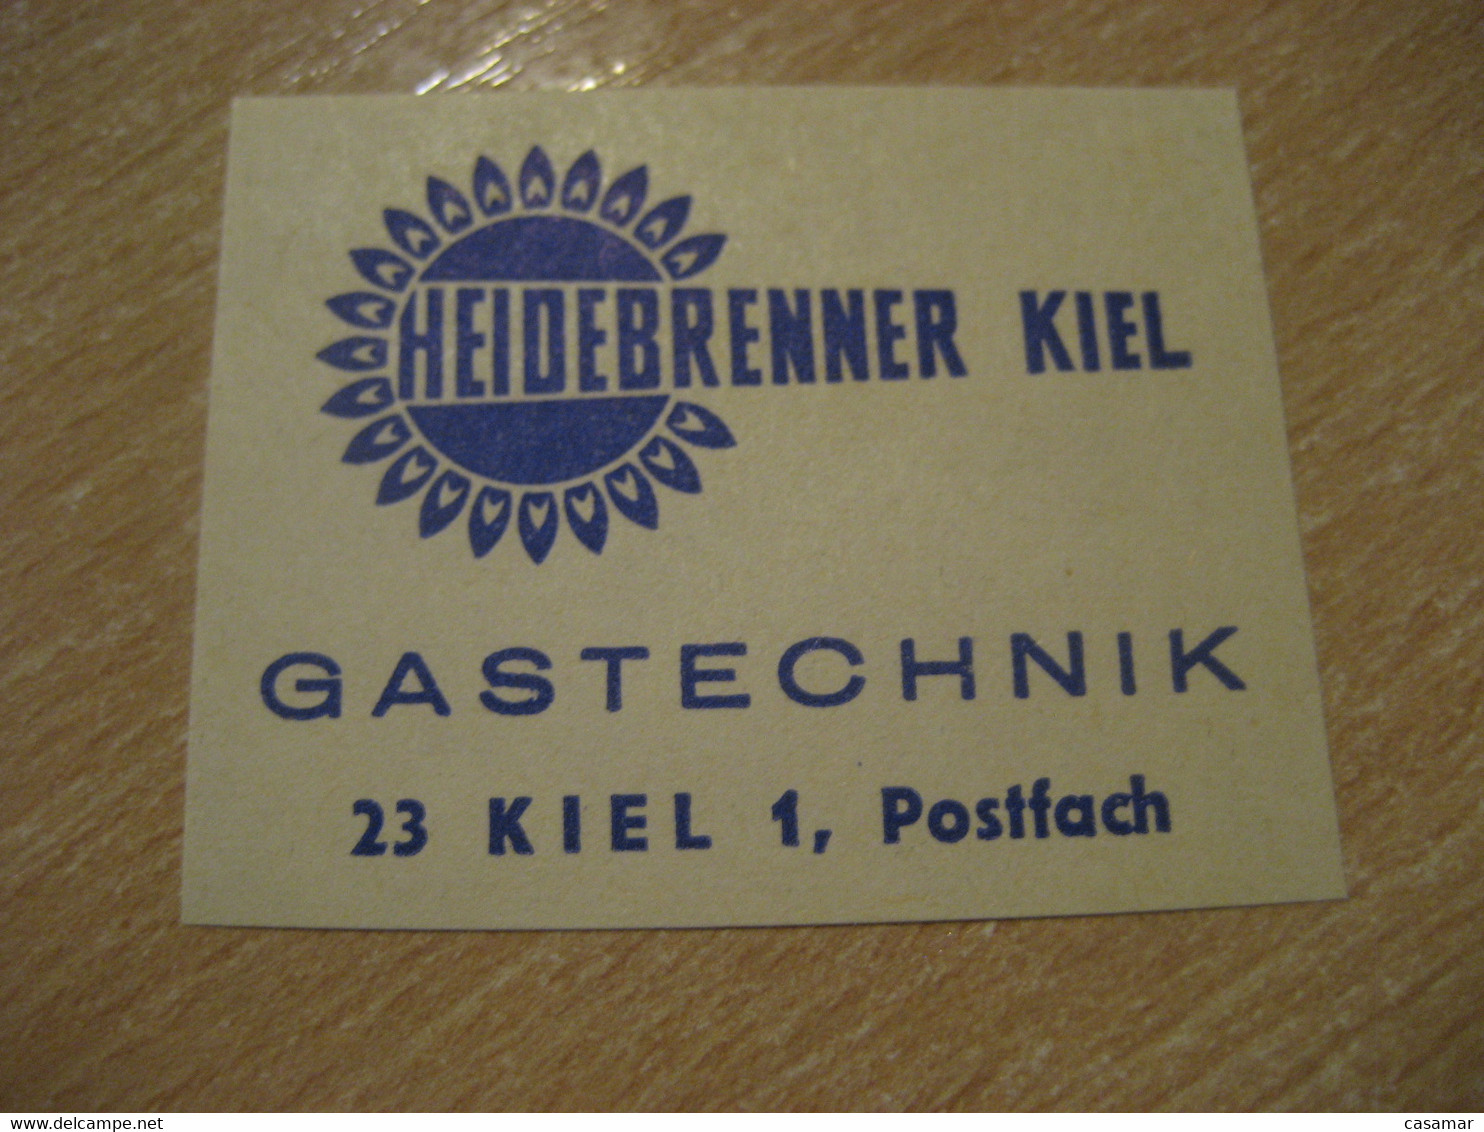 KIEL Heidebrenner Gastechnik Gas Energy Science Geology Poster Stamp Vignette GERMANY Label - Gaz